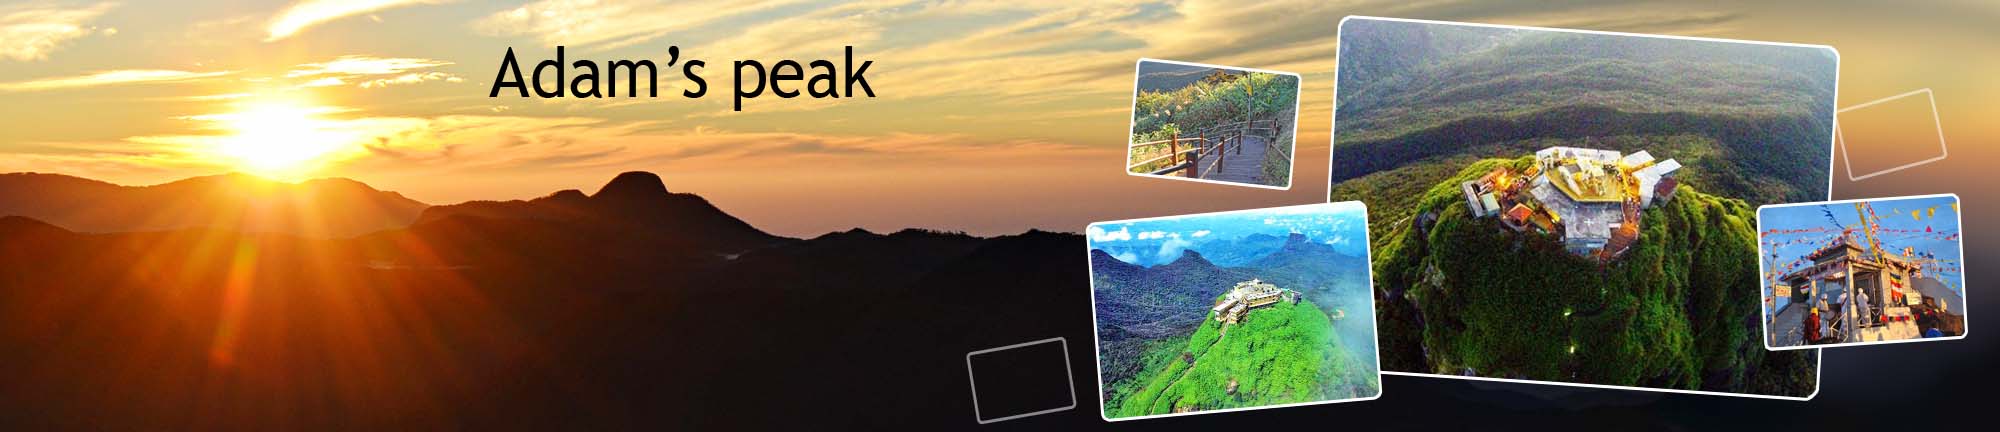 inora-travel-lanka-adams-peak-banner